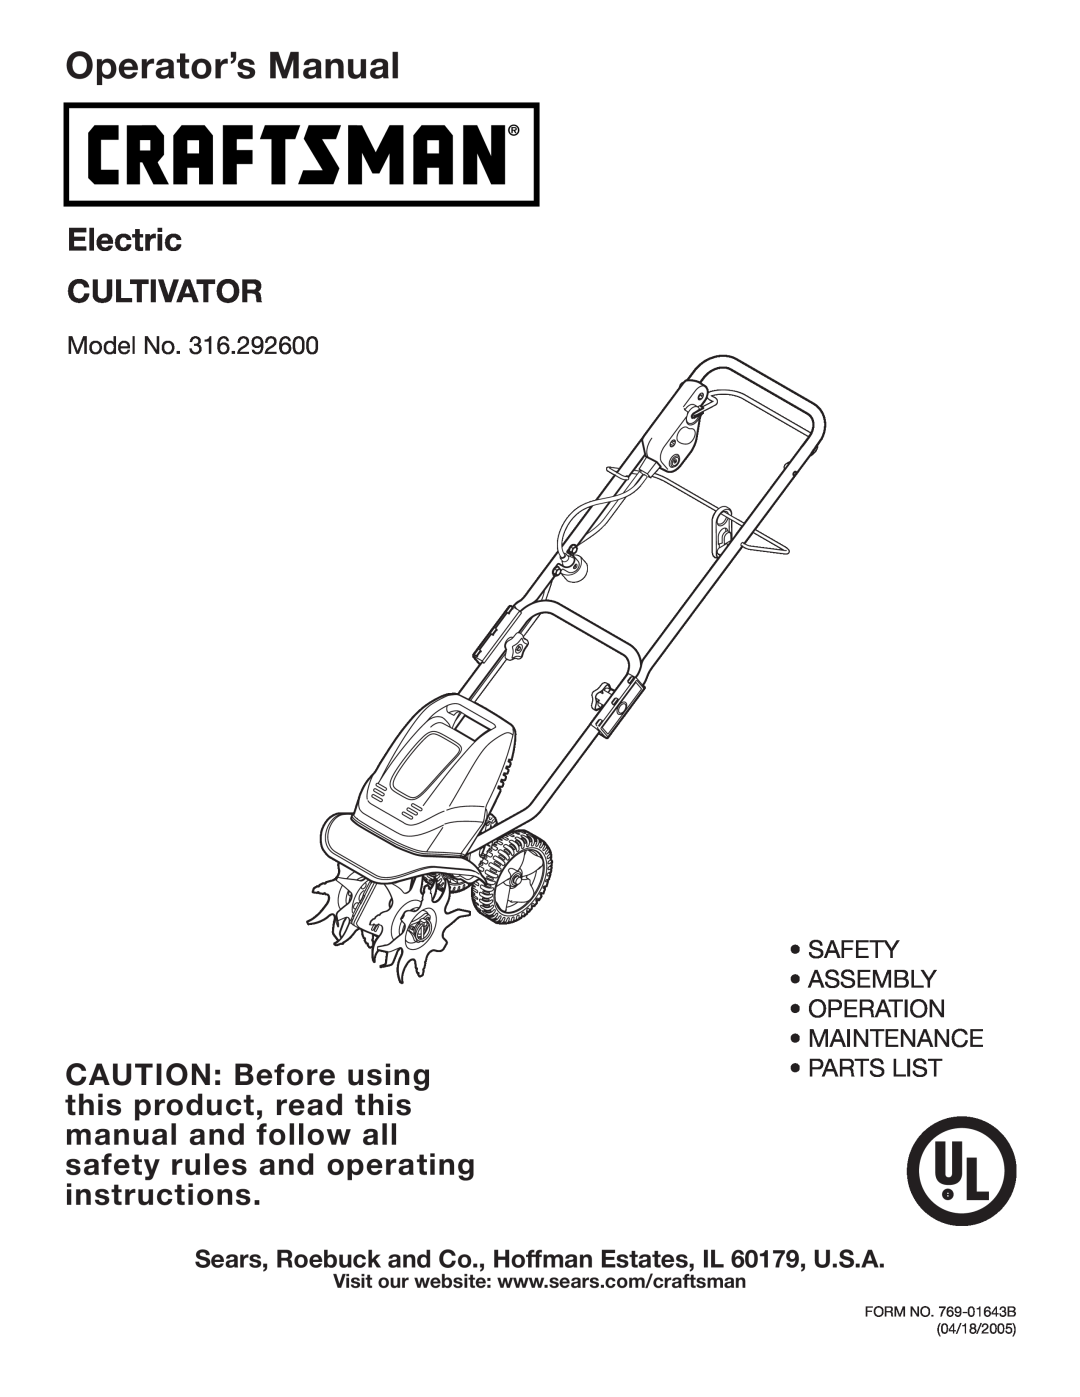 Craftsman 316.2926 manual Operator’s Manual, Electric CULTIVATOR 